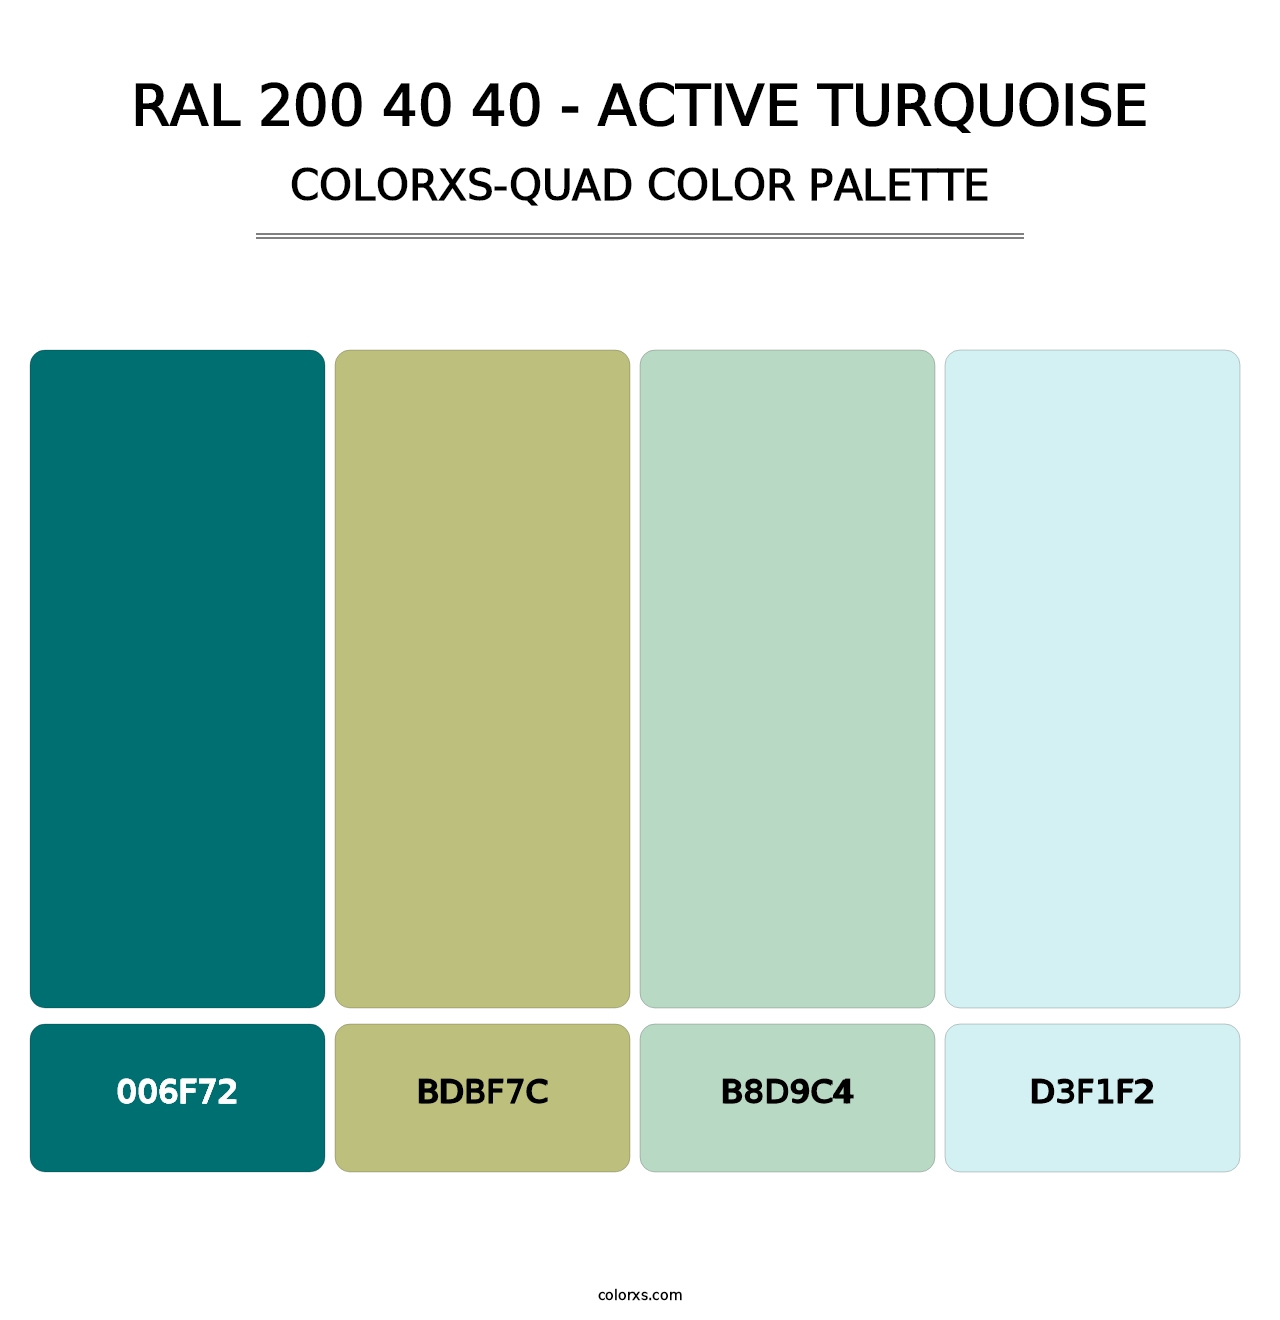 RAL 200 40 40 - Active Turquoise - Colorxs Quad Palette